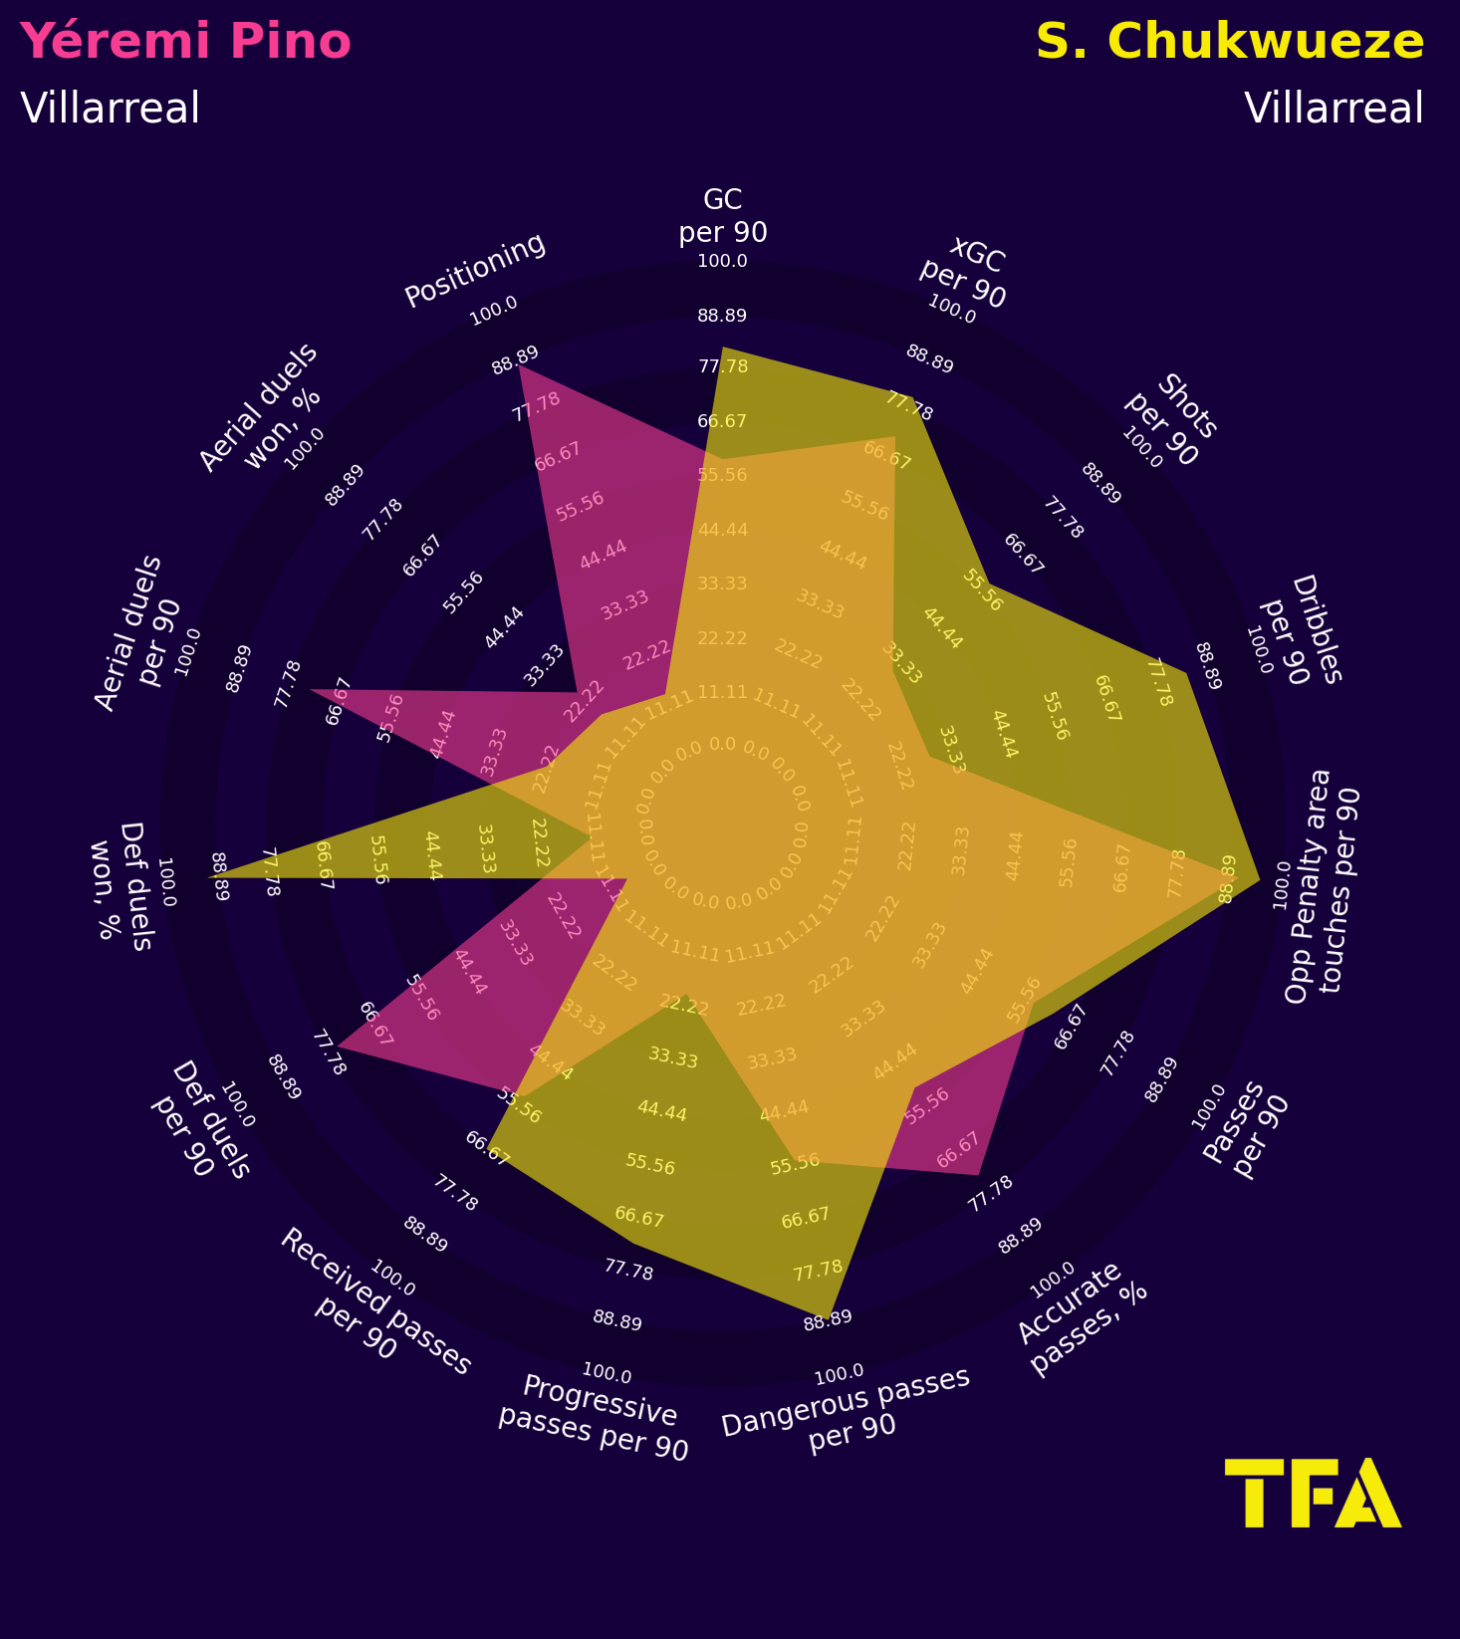 Yeremi Pino Villarreal La Liga 2022/23 Data Stats Analysis